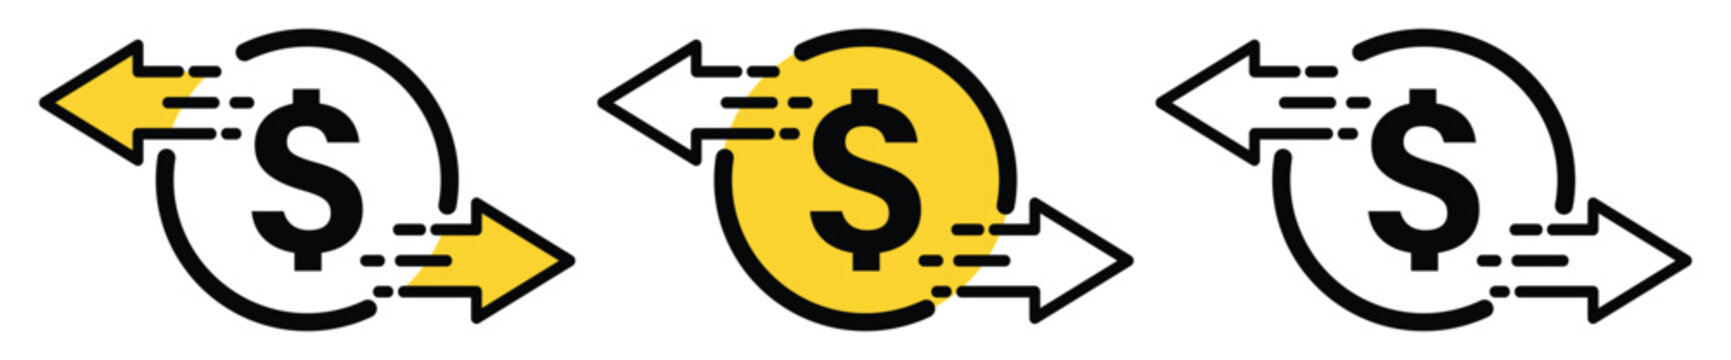 Money transfer icon. vector dollar symbol design for mobile app, ui, web. vector illustration on transparent background.